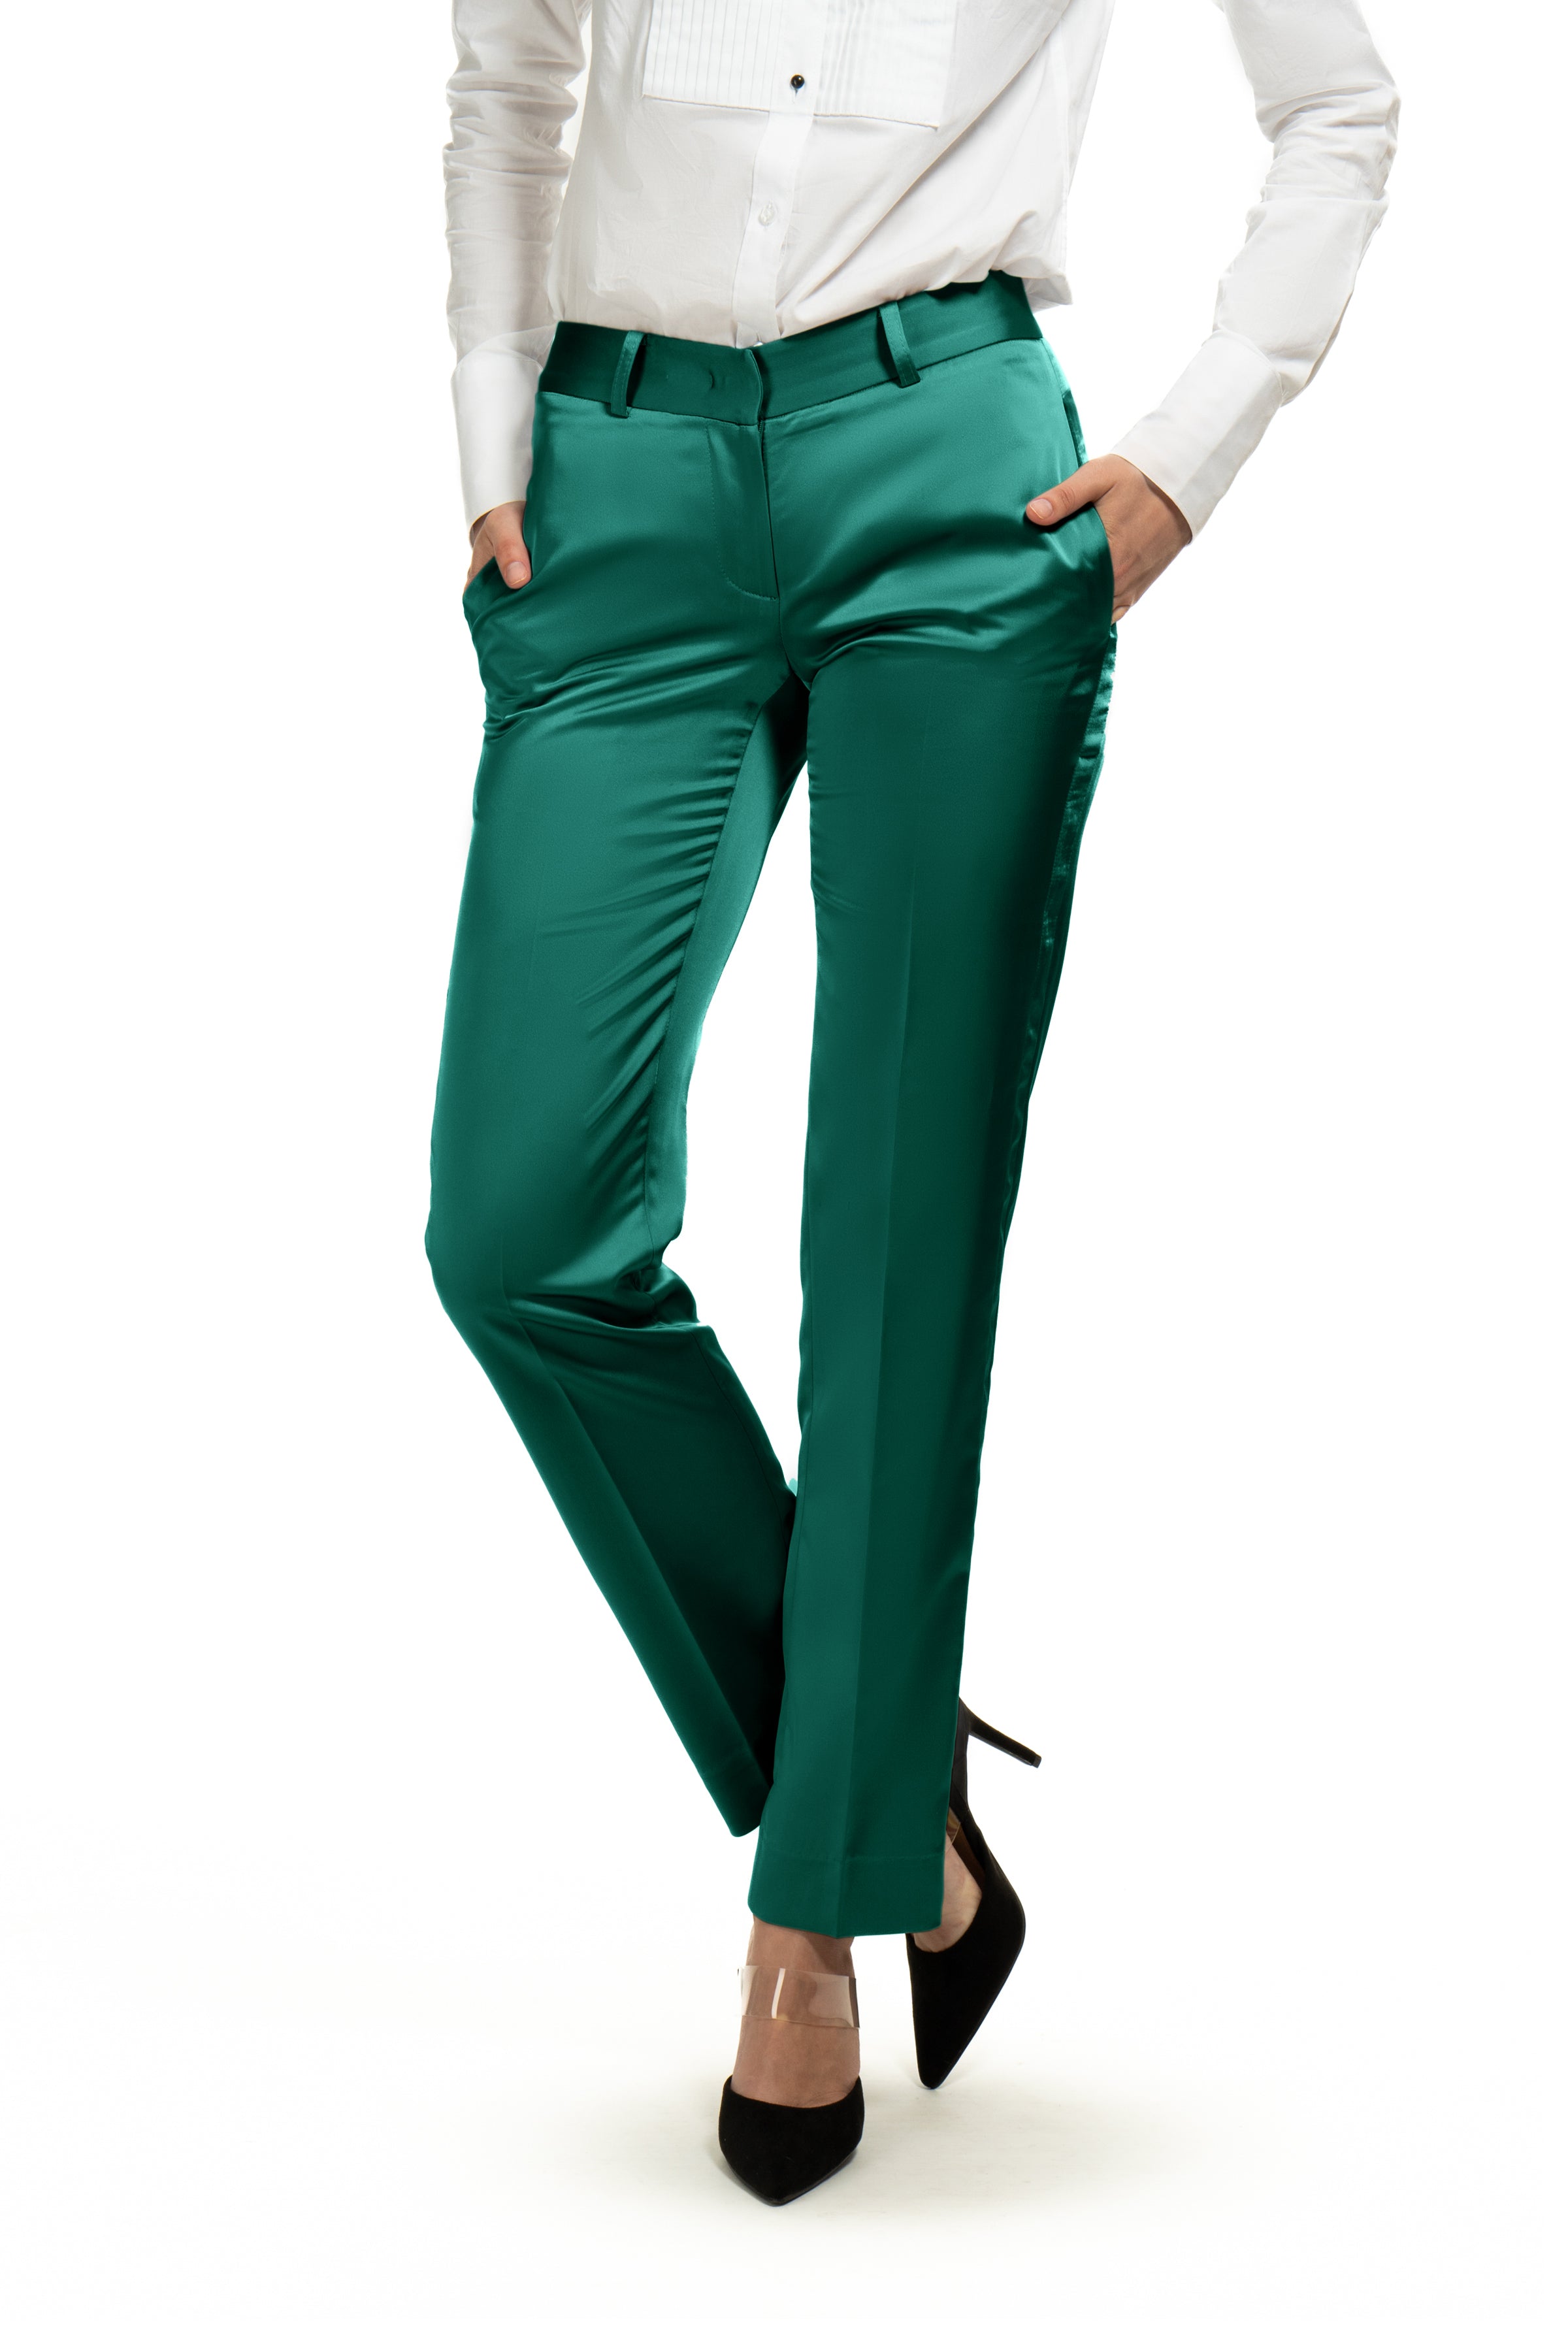 Buy Formal Trousers For Women & Formal Pants For Women - Apella